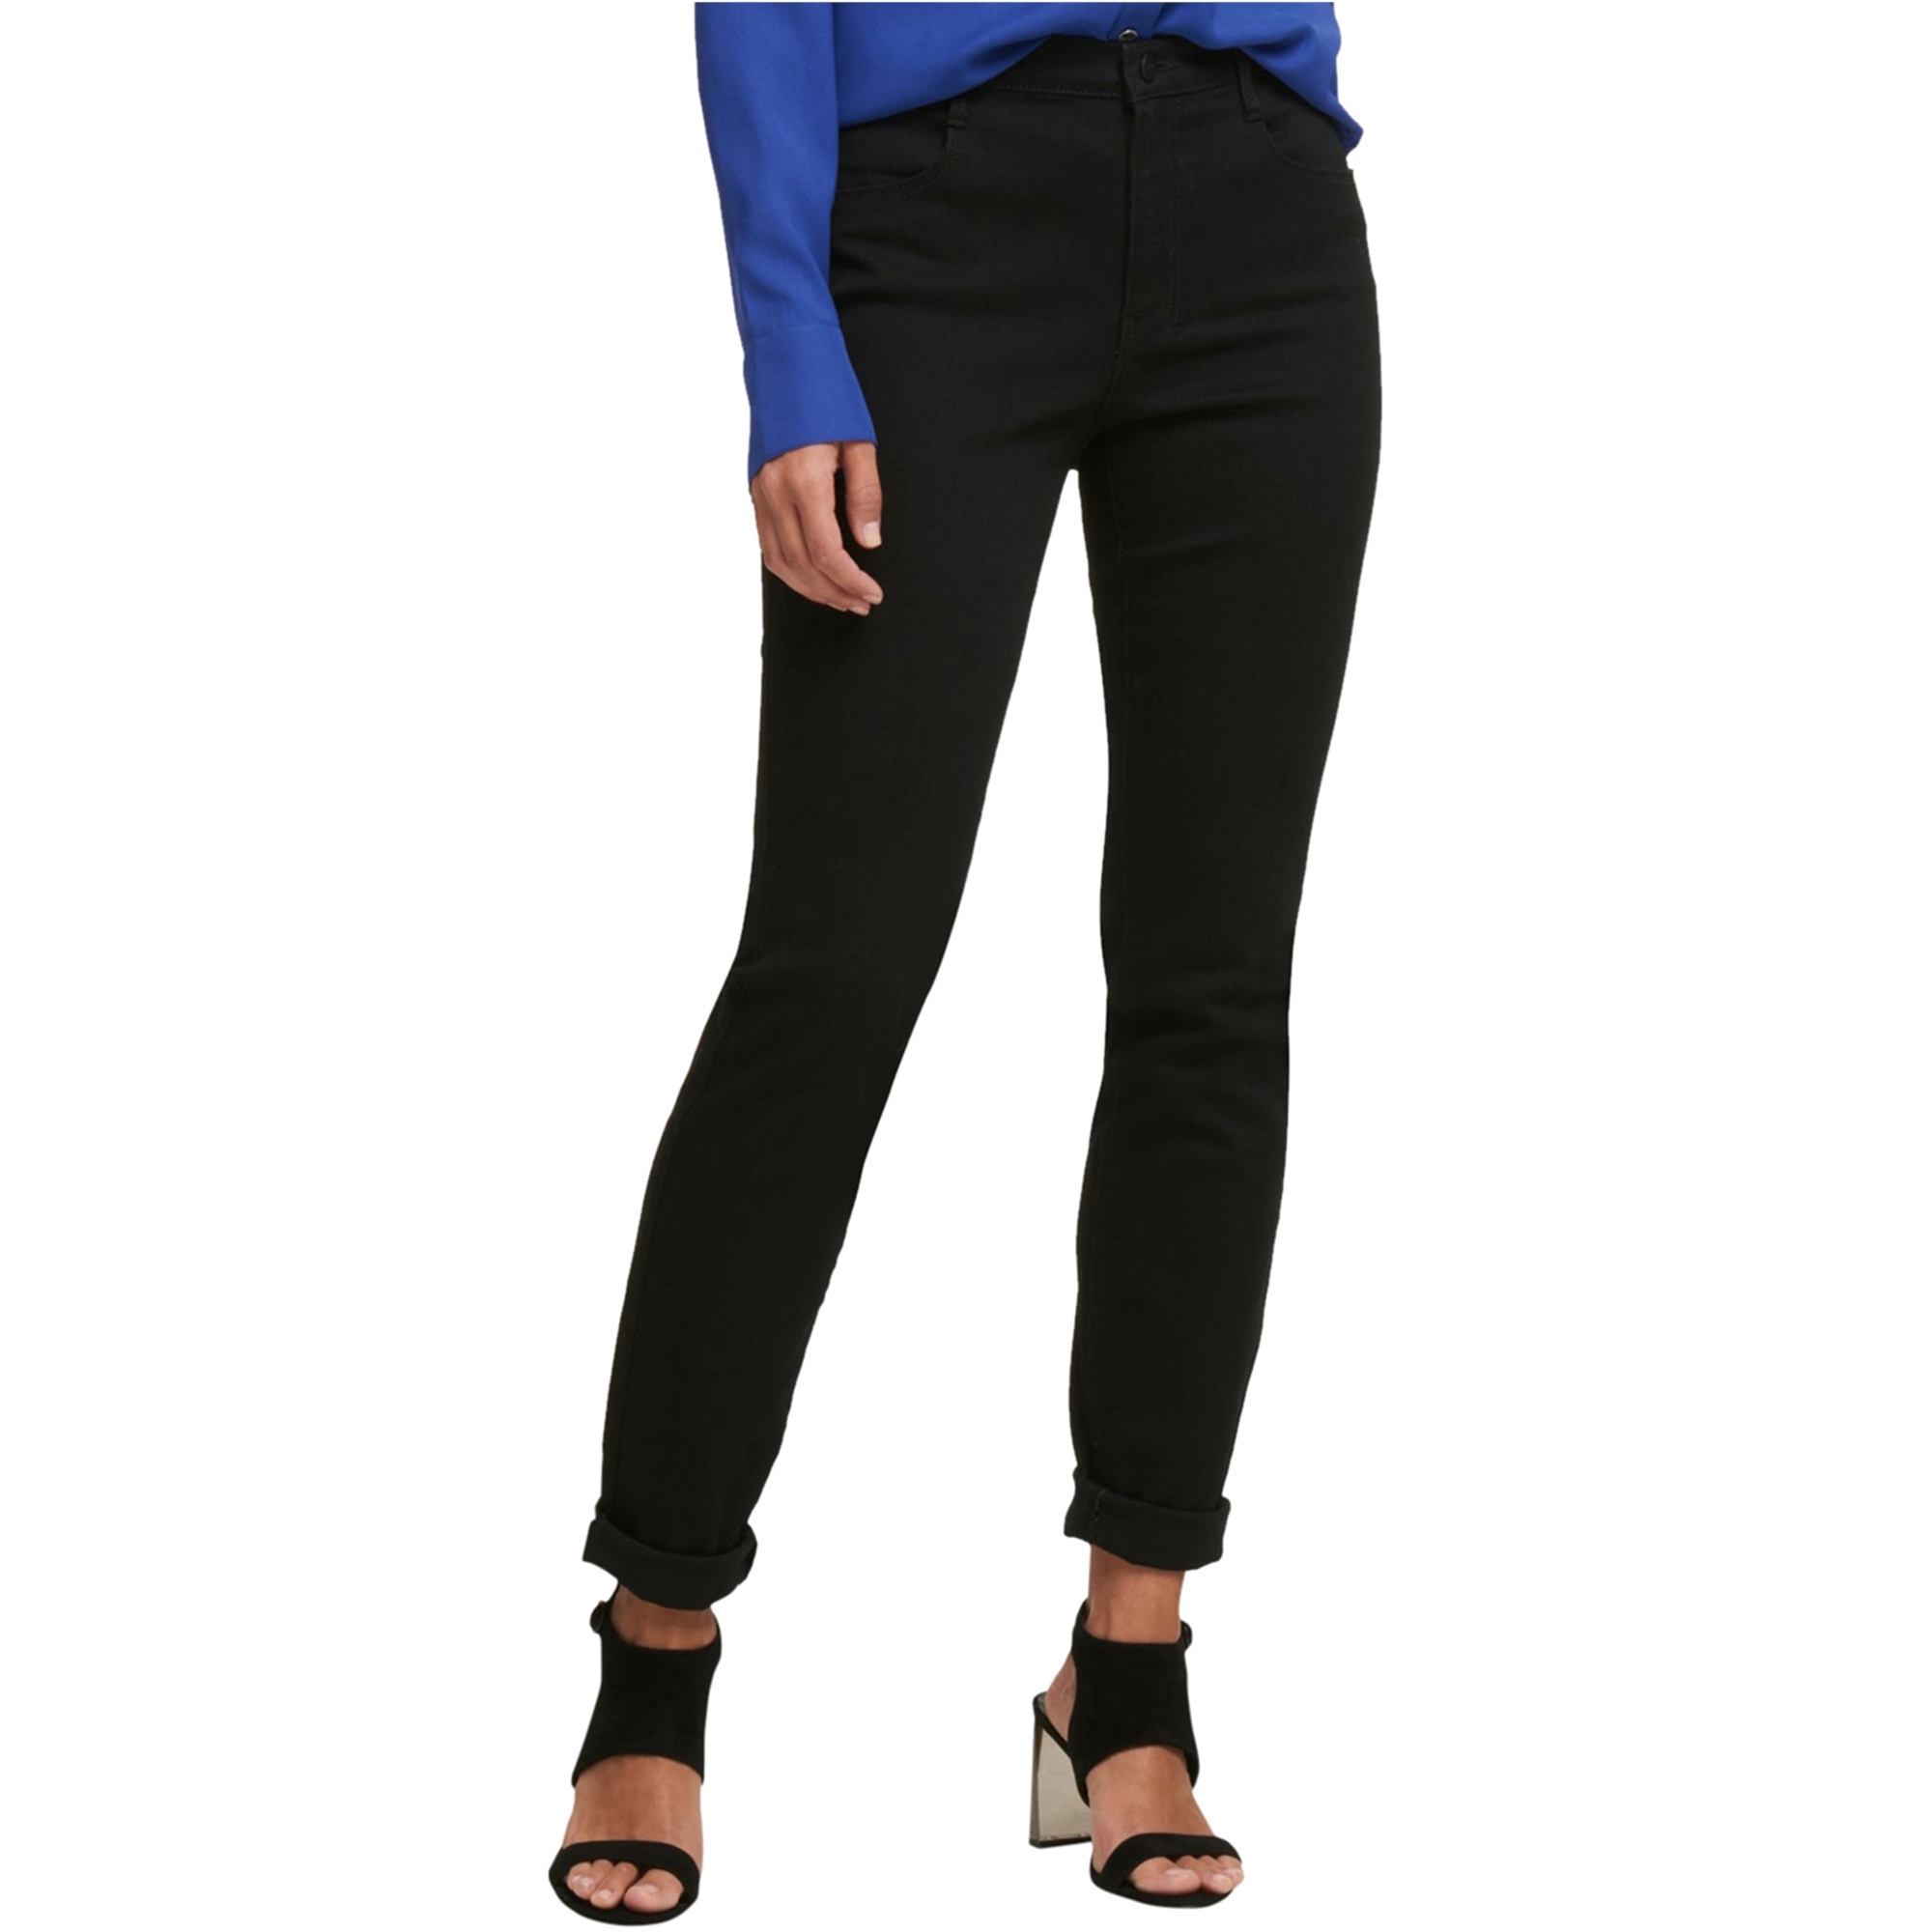 DKNY Womens Soho Skinny Fit Jeans, Black, 27 - image 1 of 1